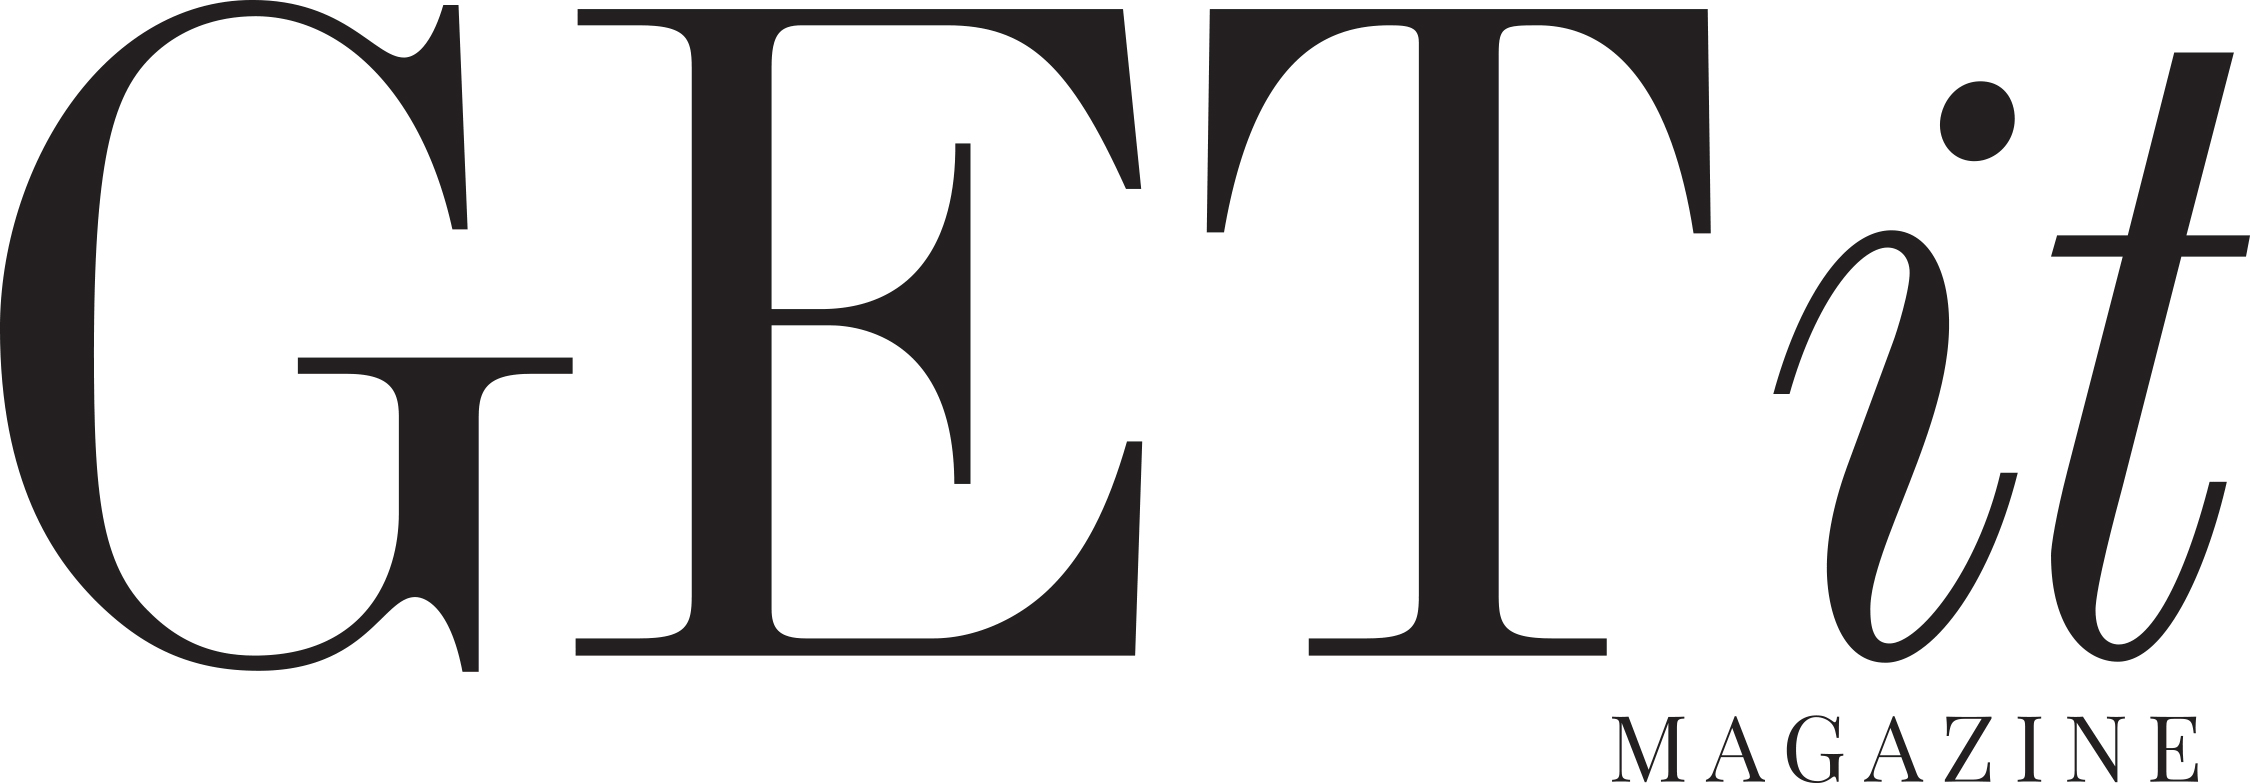 Get-It-Magazine-Logo